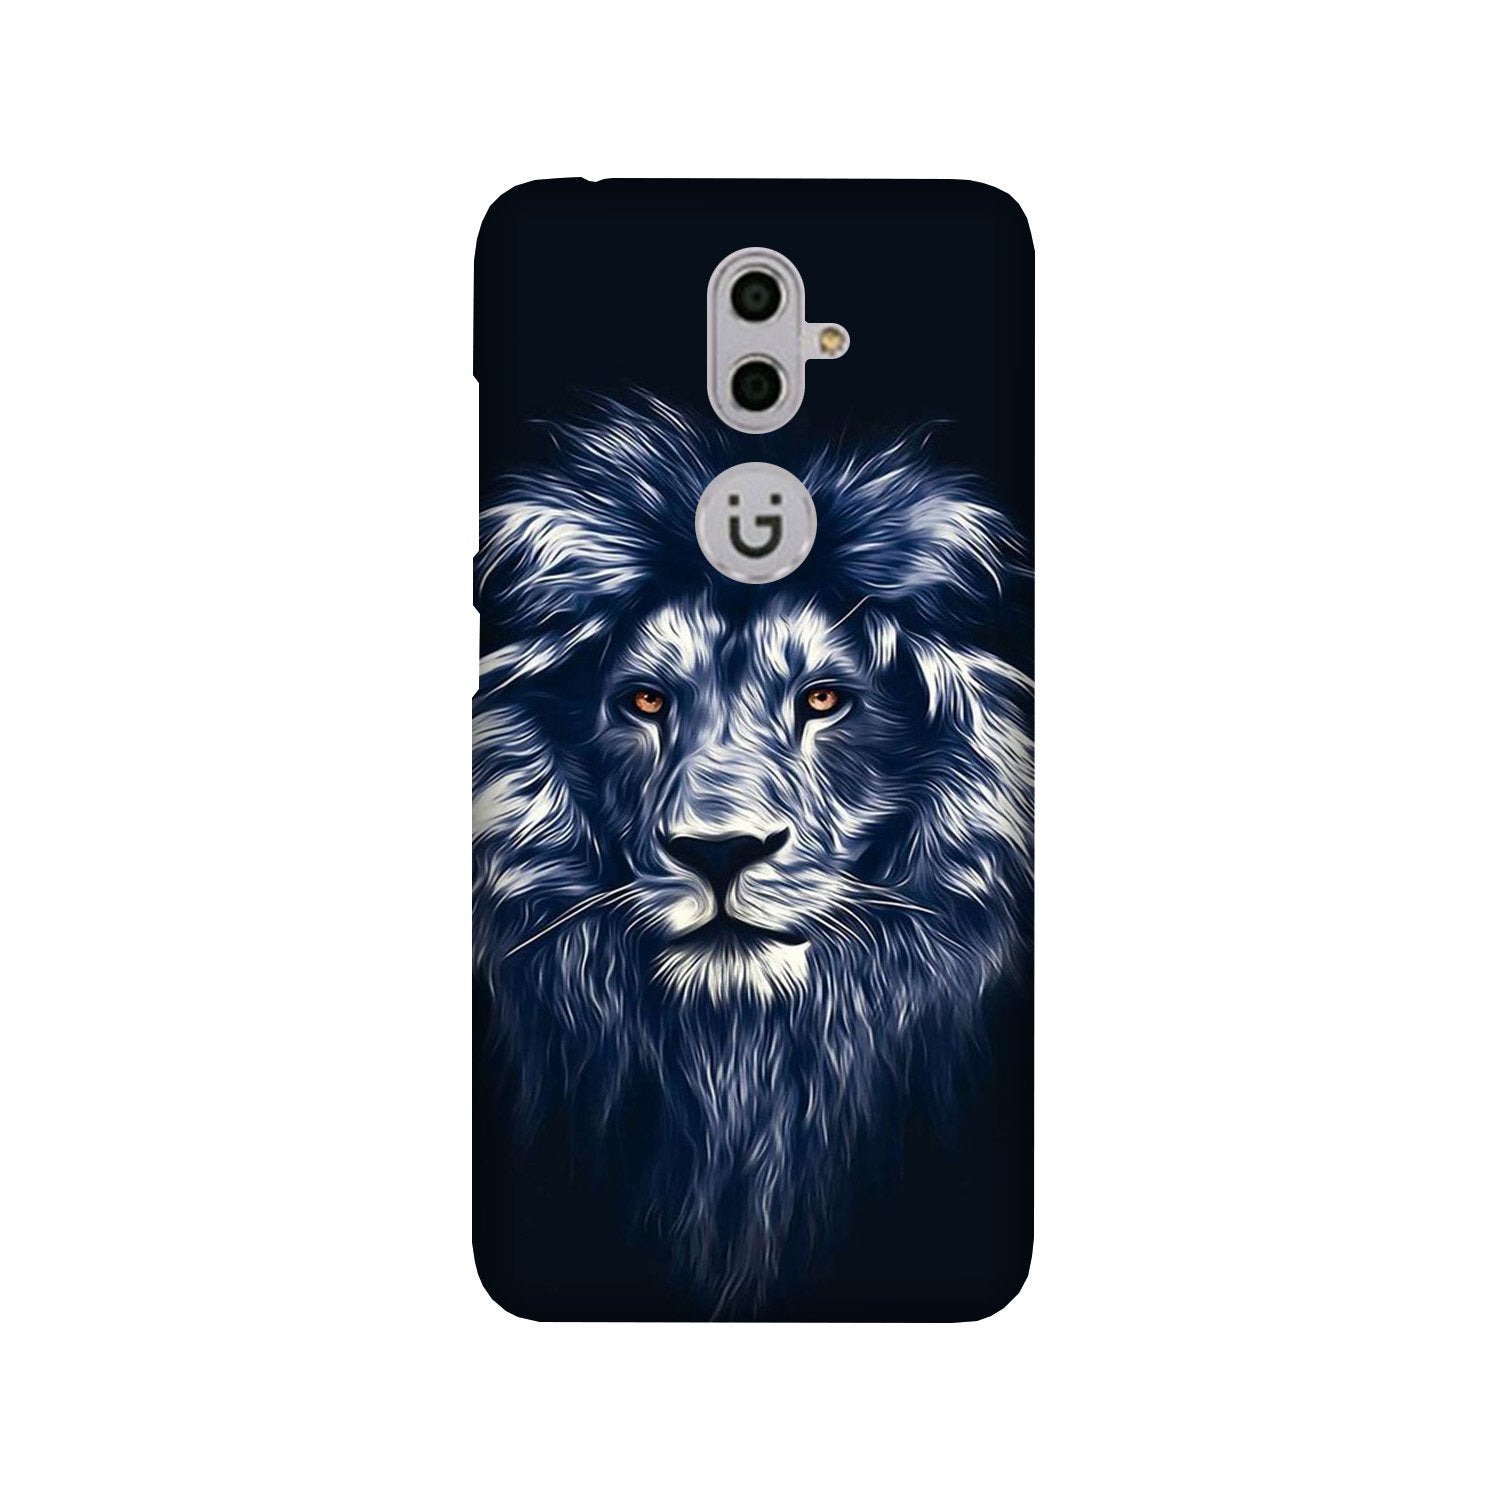 Lion Case for Gionee S9 (Design No. 281)